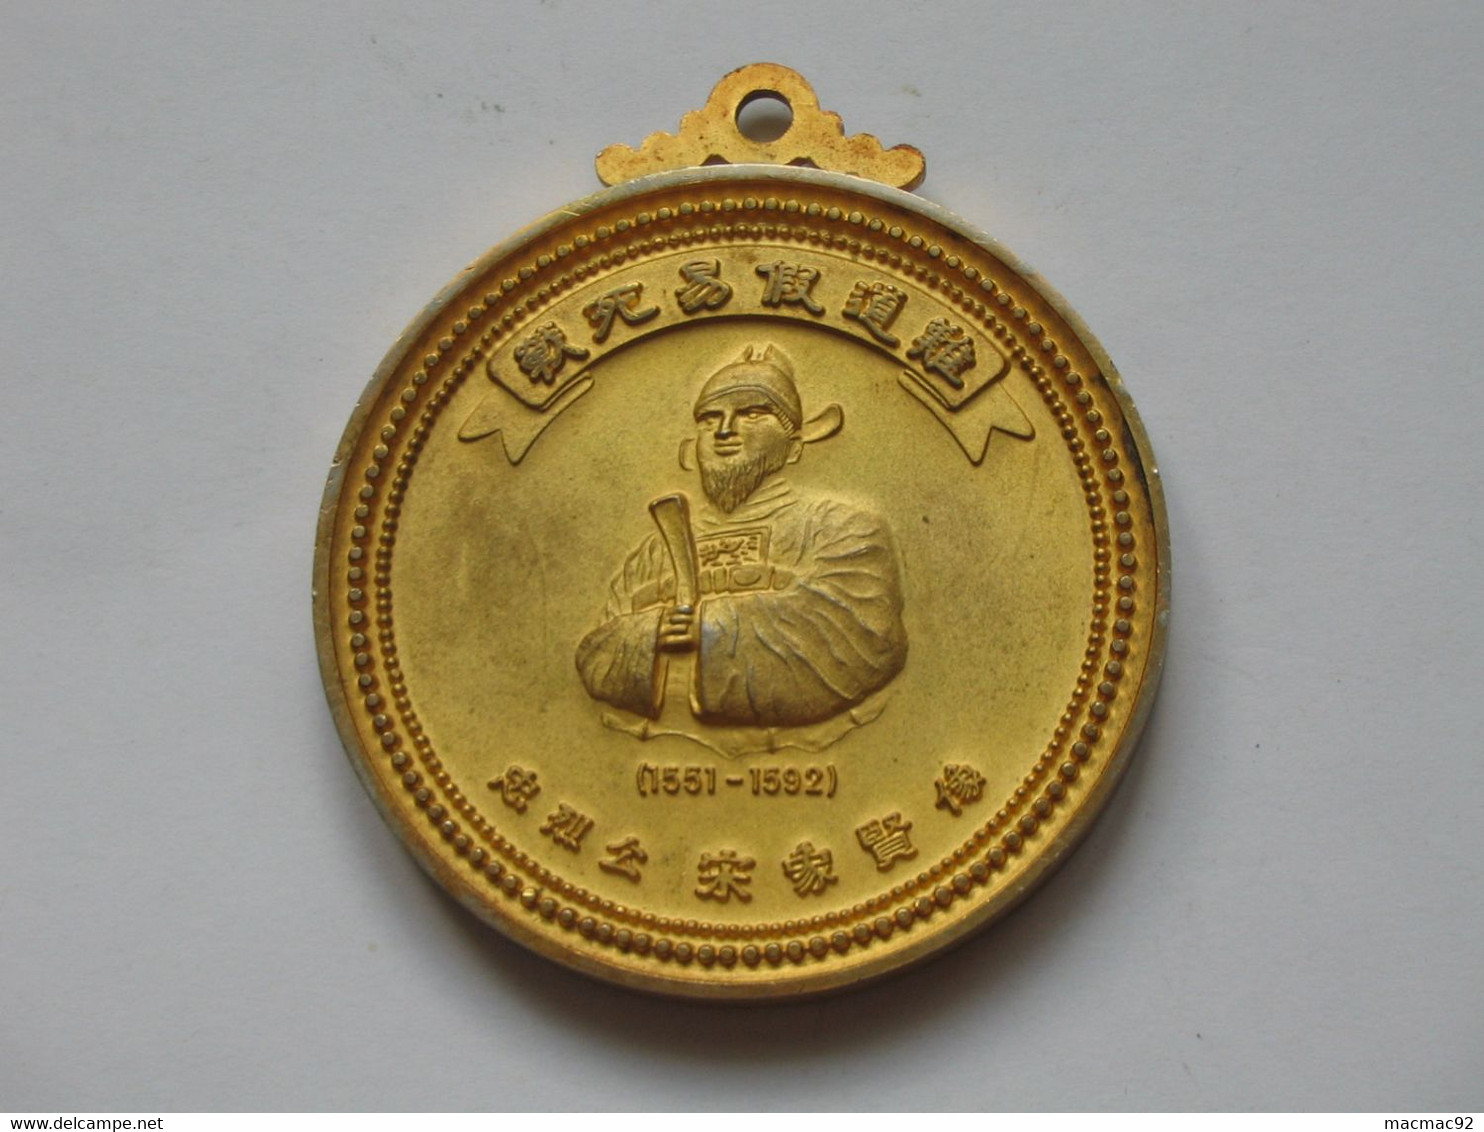 MAGNIFIQUE Médaille - WELCOME TO PUSAN REPUBLIC OF KOREA - MAYOR OF PUSAN  **** EN ACHAT IMMEDIAT  **** - Monarquía / Nobleza